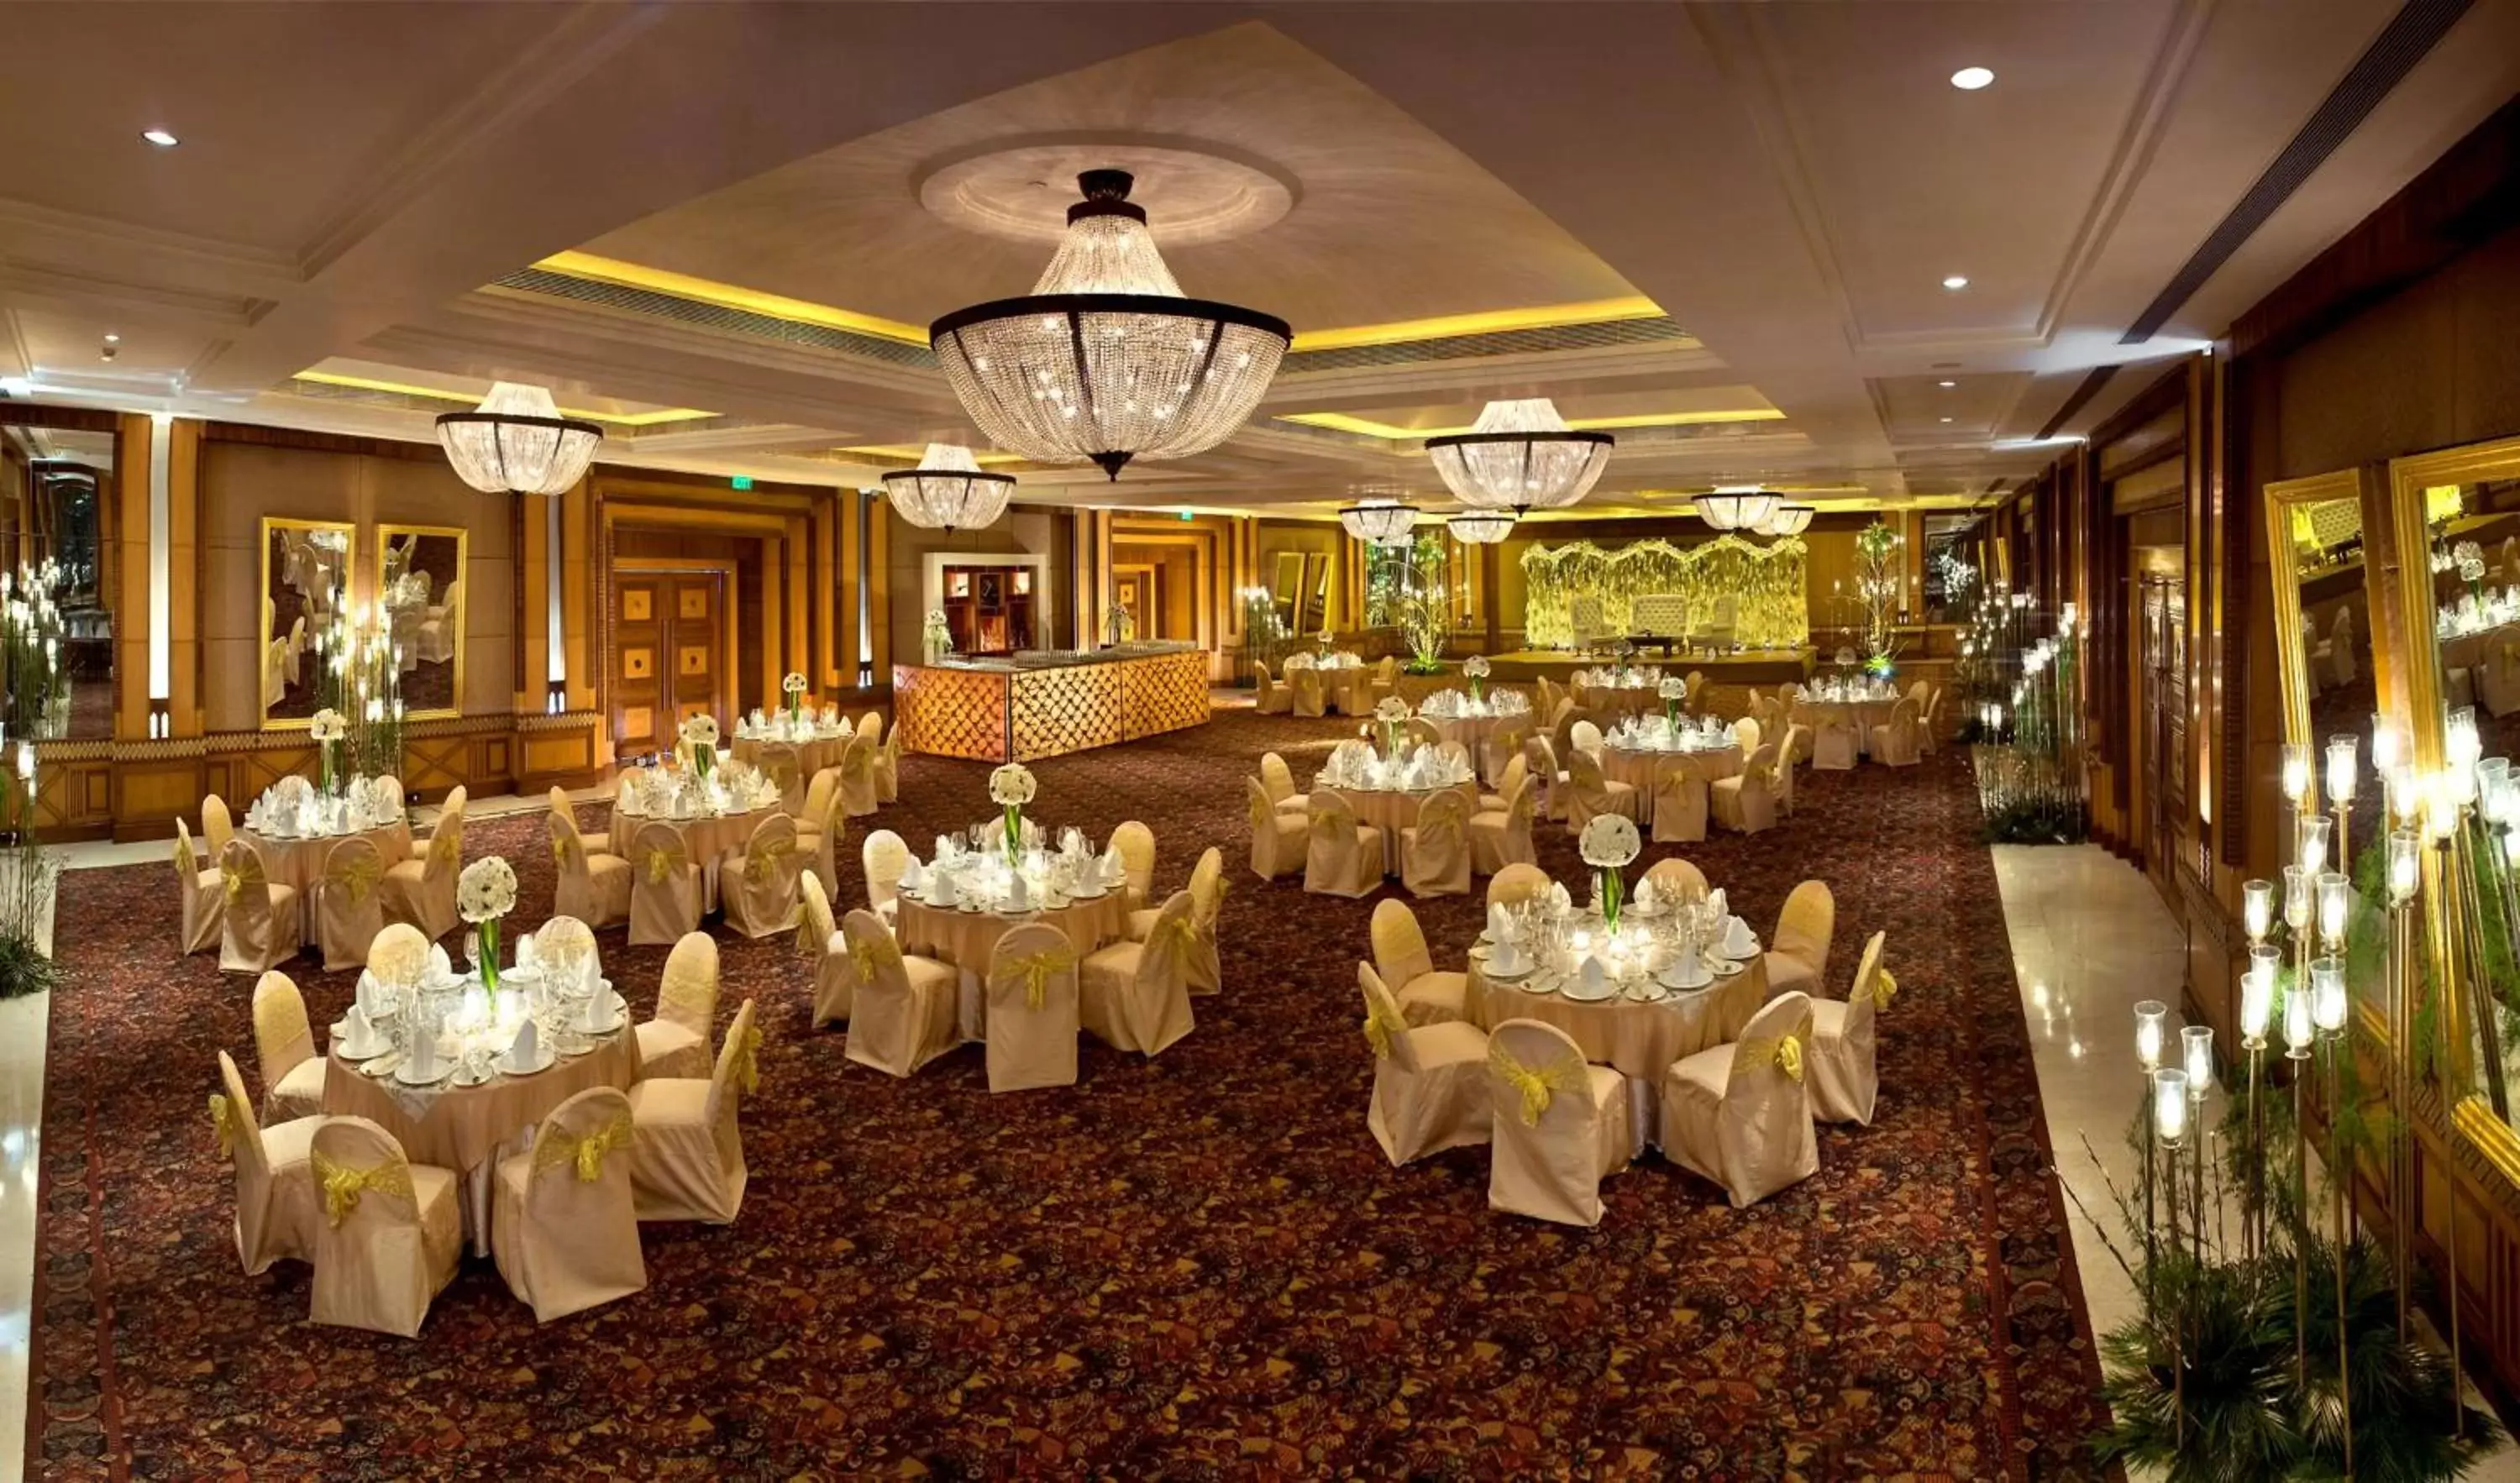 On site, Banquet Facilities in Radisson Blu MBD Hotel Noida